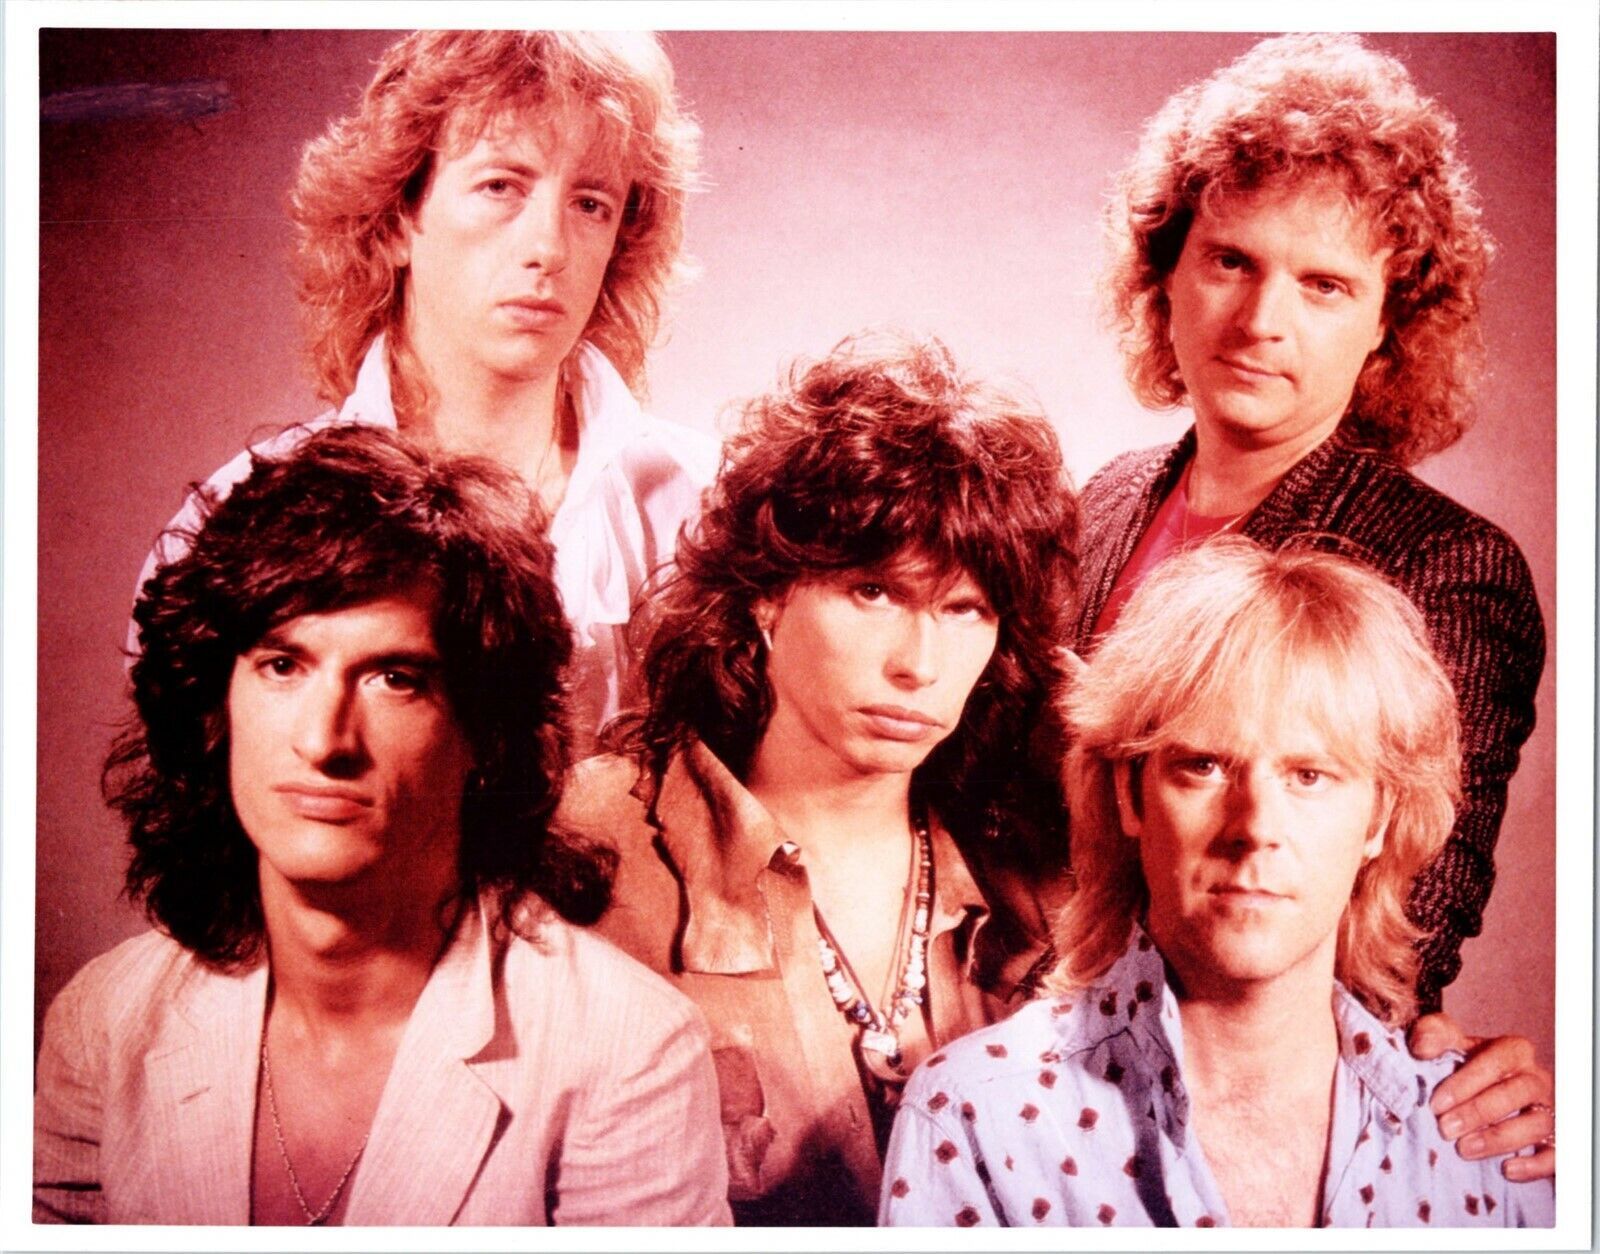 Primary image for Aerosmith vintage 8x10 photo 1980's portrait Steve Tyler and group studio pose